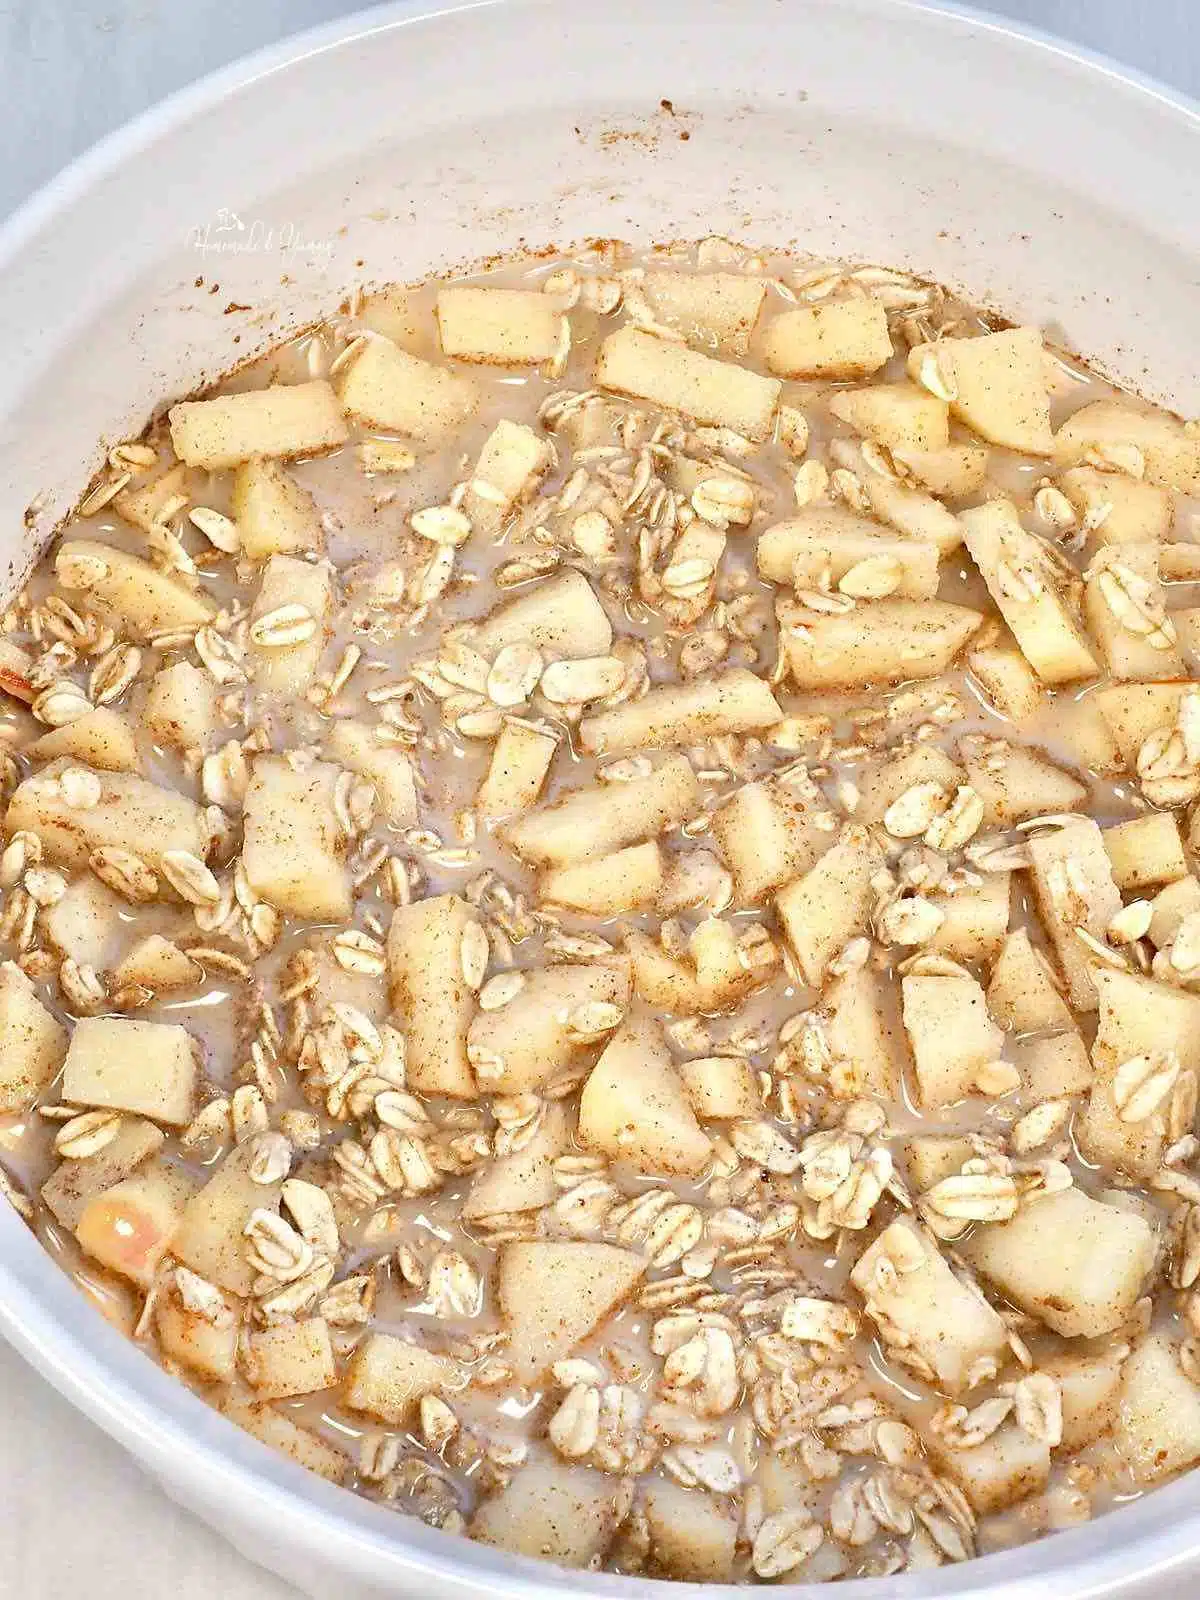 Apple oatmeal getting ready to bake.